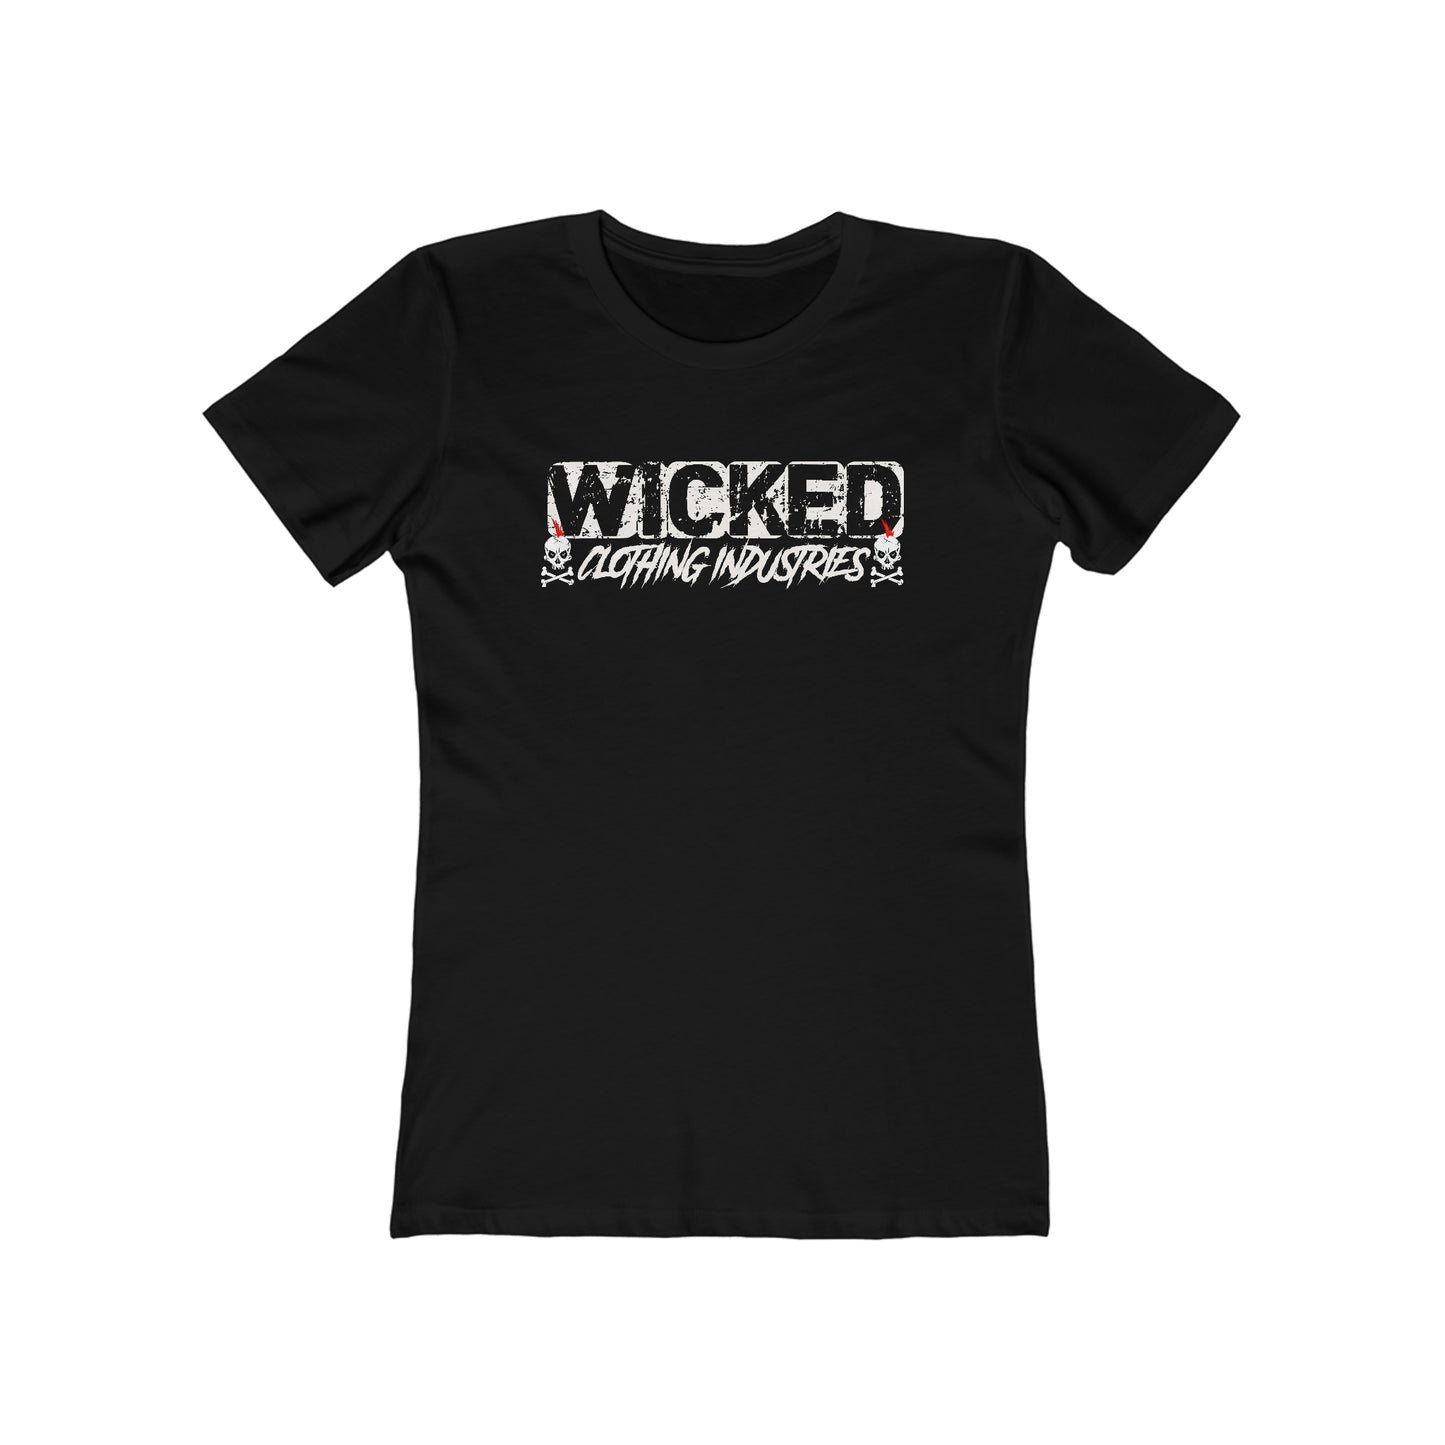 Wicked Punk Rock 2 T-Shirt